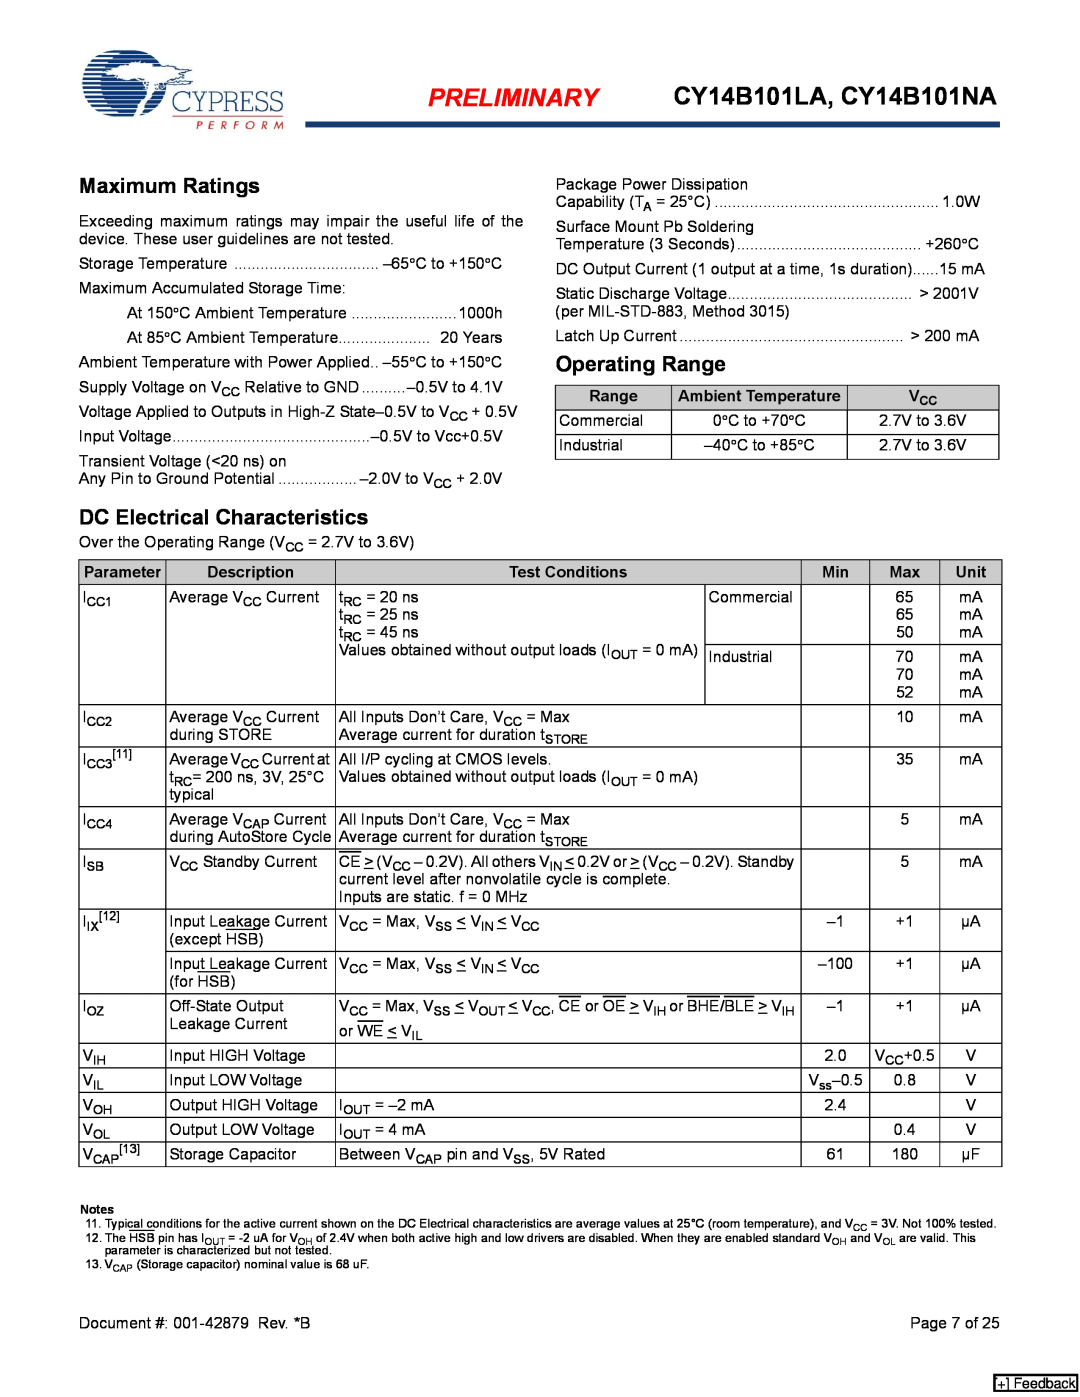 Cypress manual Maximum Ratings, Operating Range, DC Electrical Characteristics, PRELIMINARY CY14B101LA, CY14B101NA 